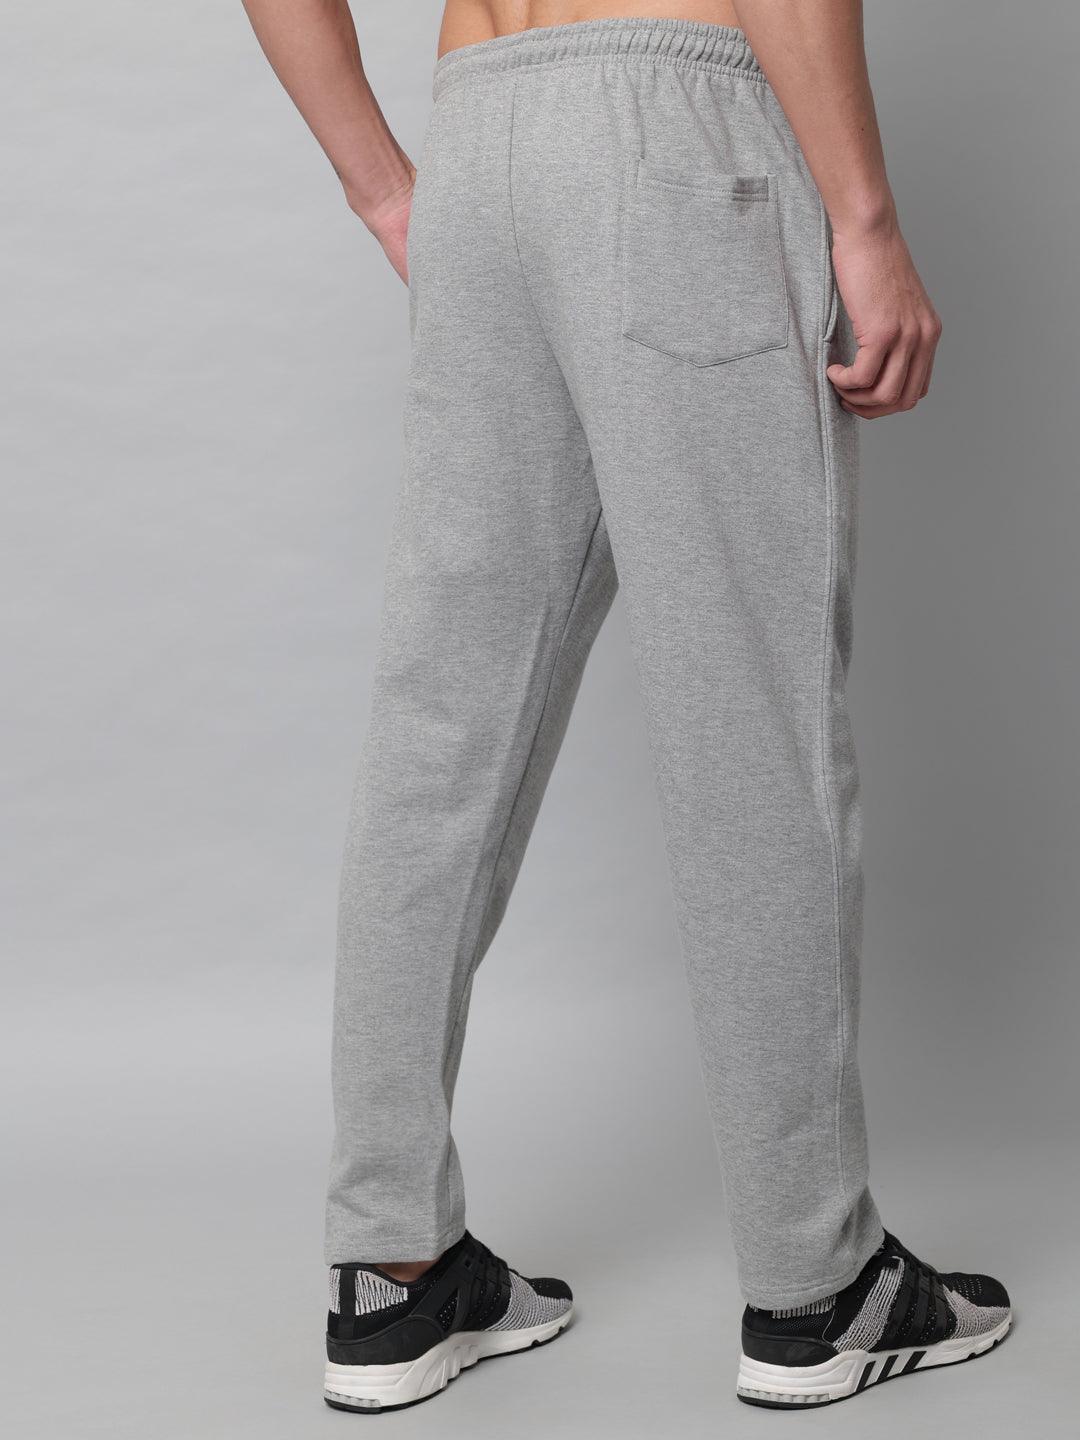 GRIFFEL Men Fleece Basic Solid Front Logo Grey Trackpants - griffel